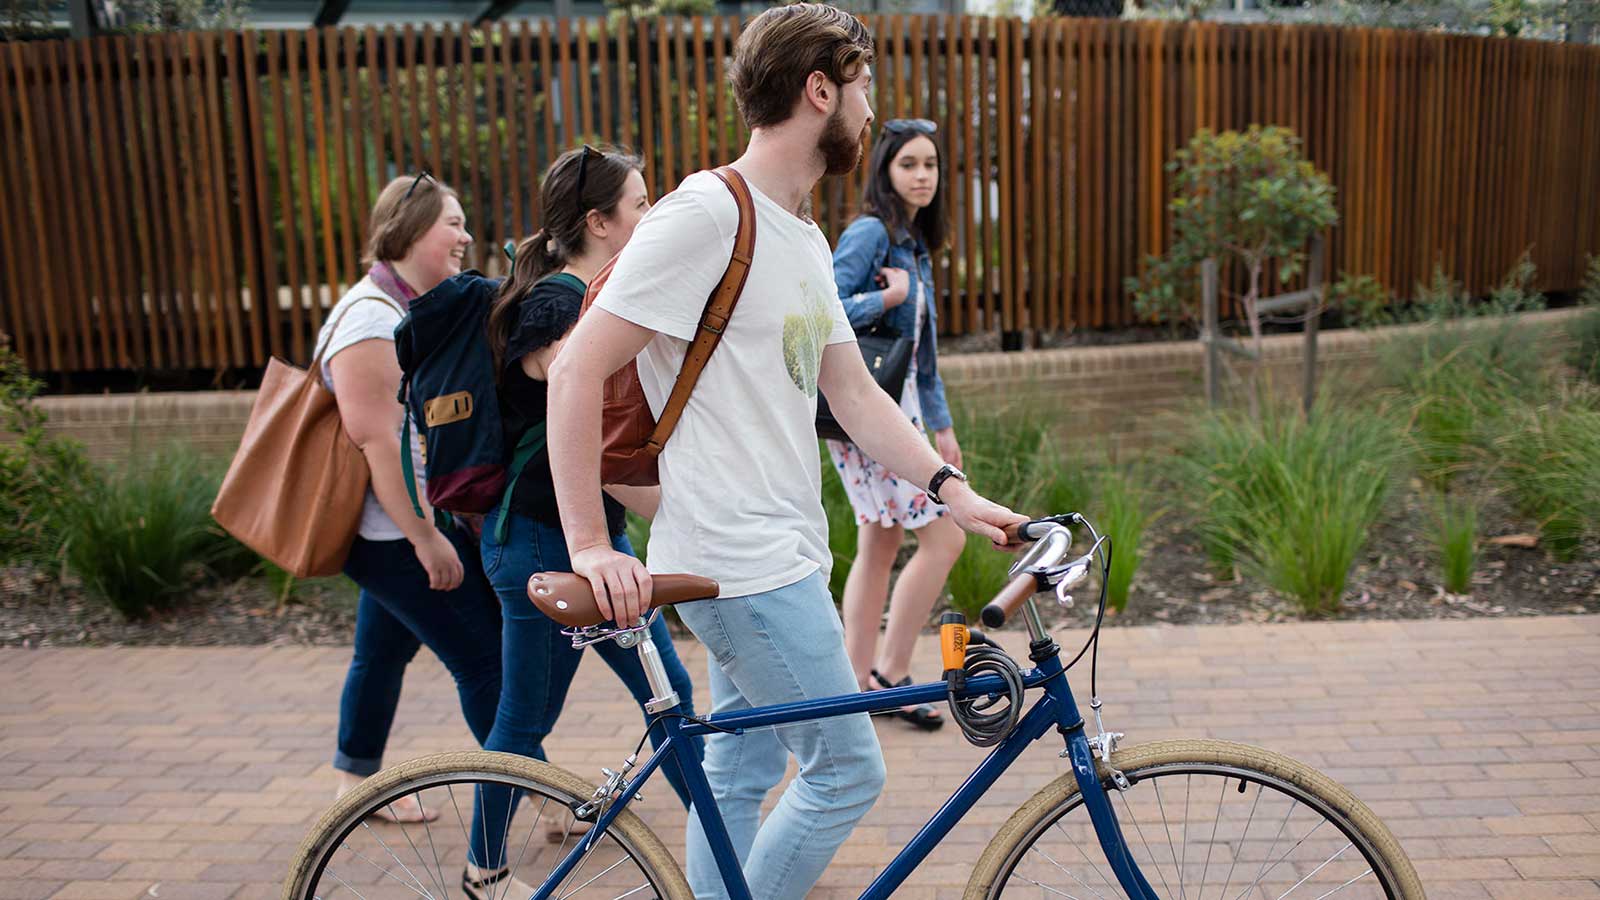 Students walking with bike